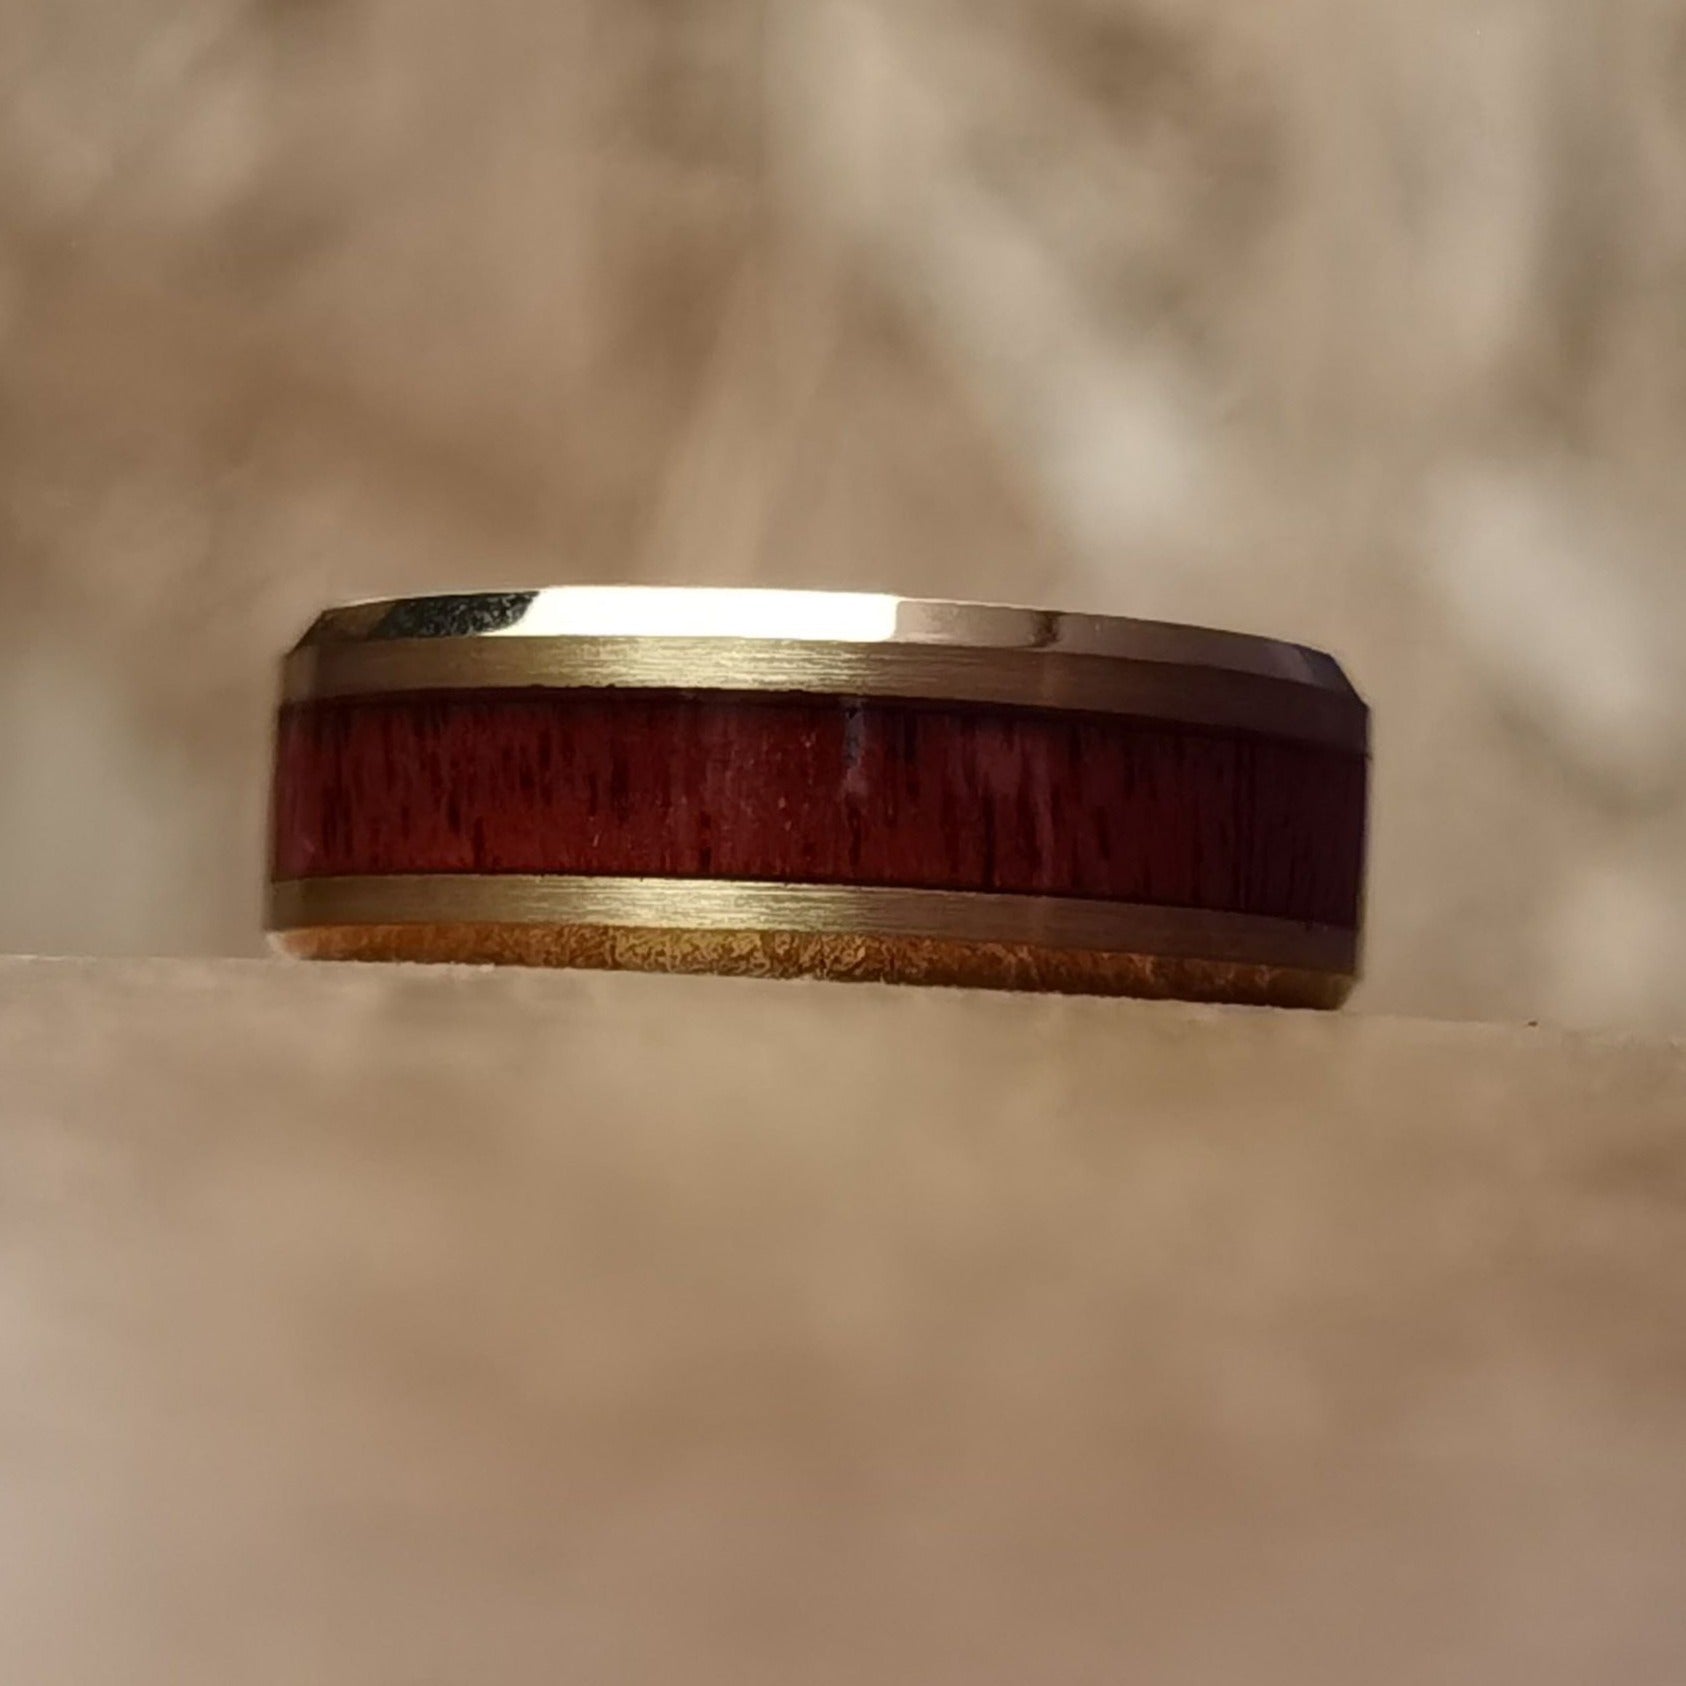 Yellow Gold - Rosewood Men's Tungsten Ring